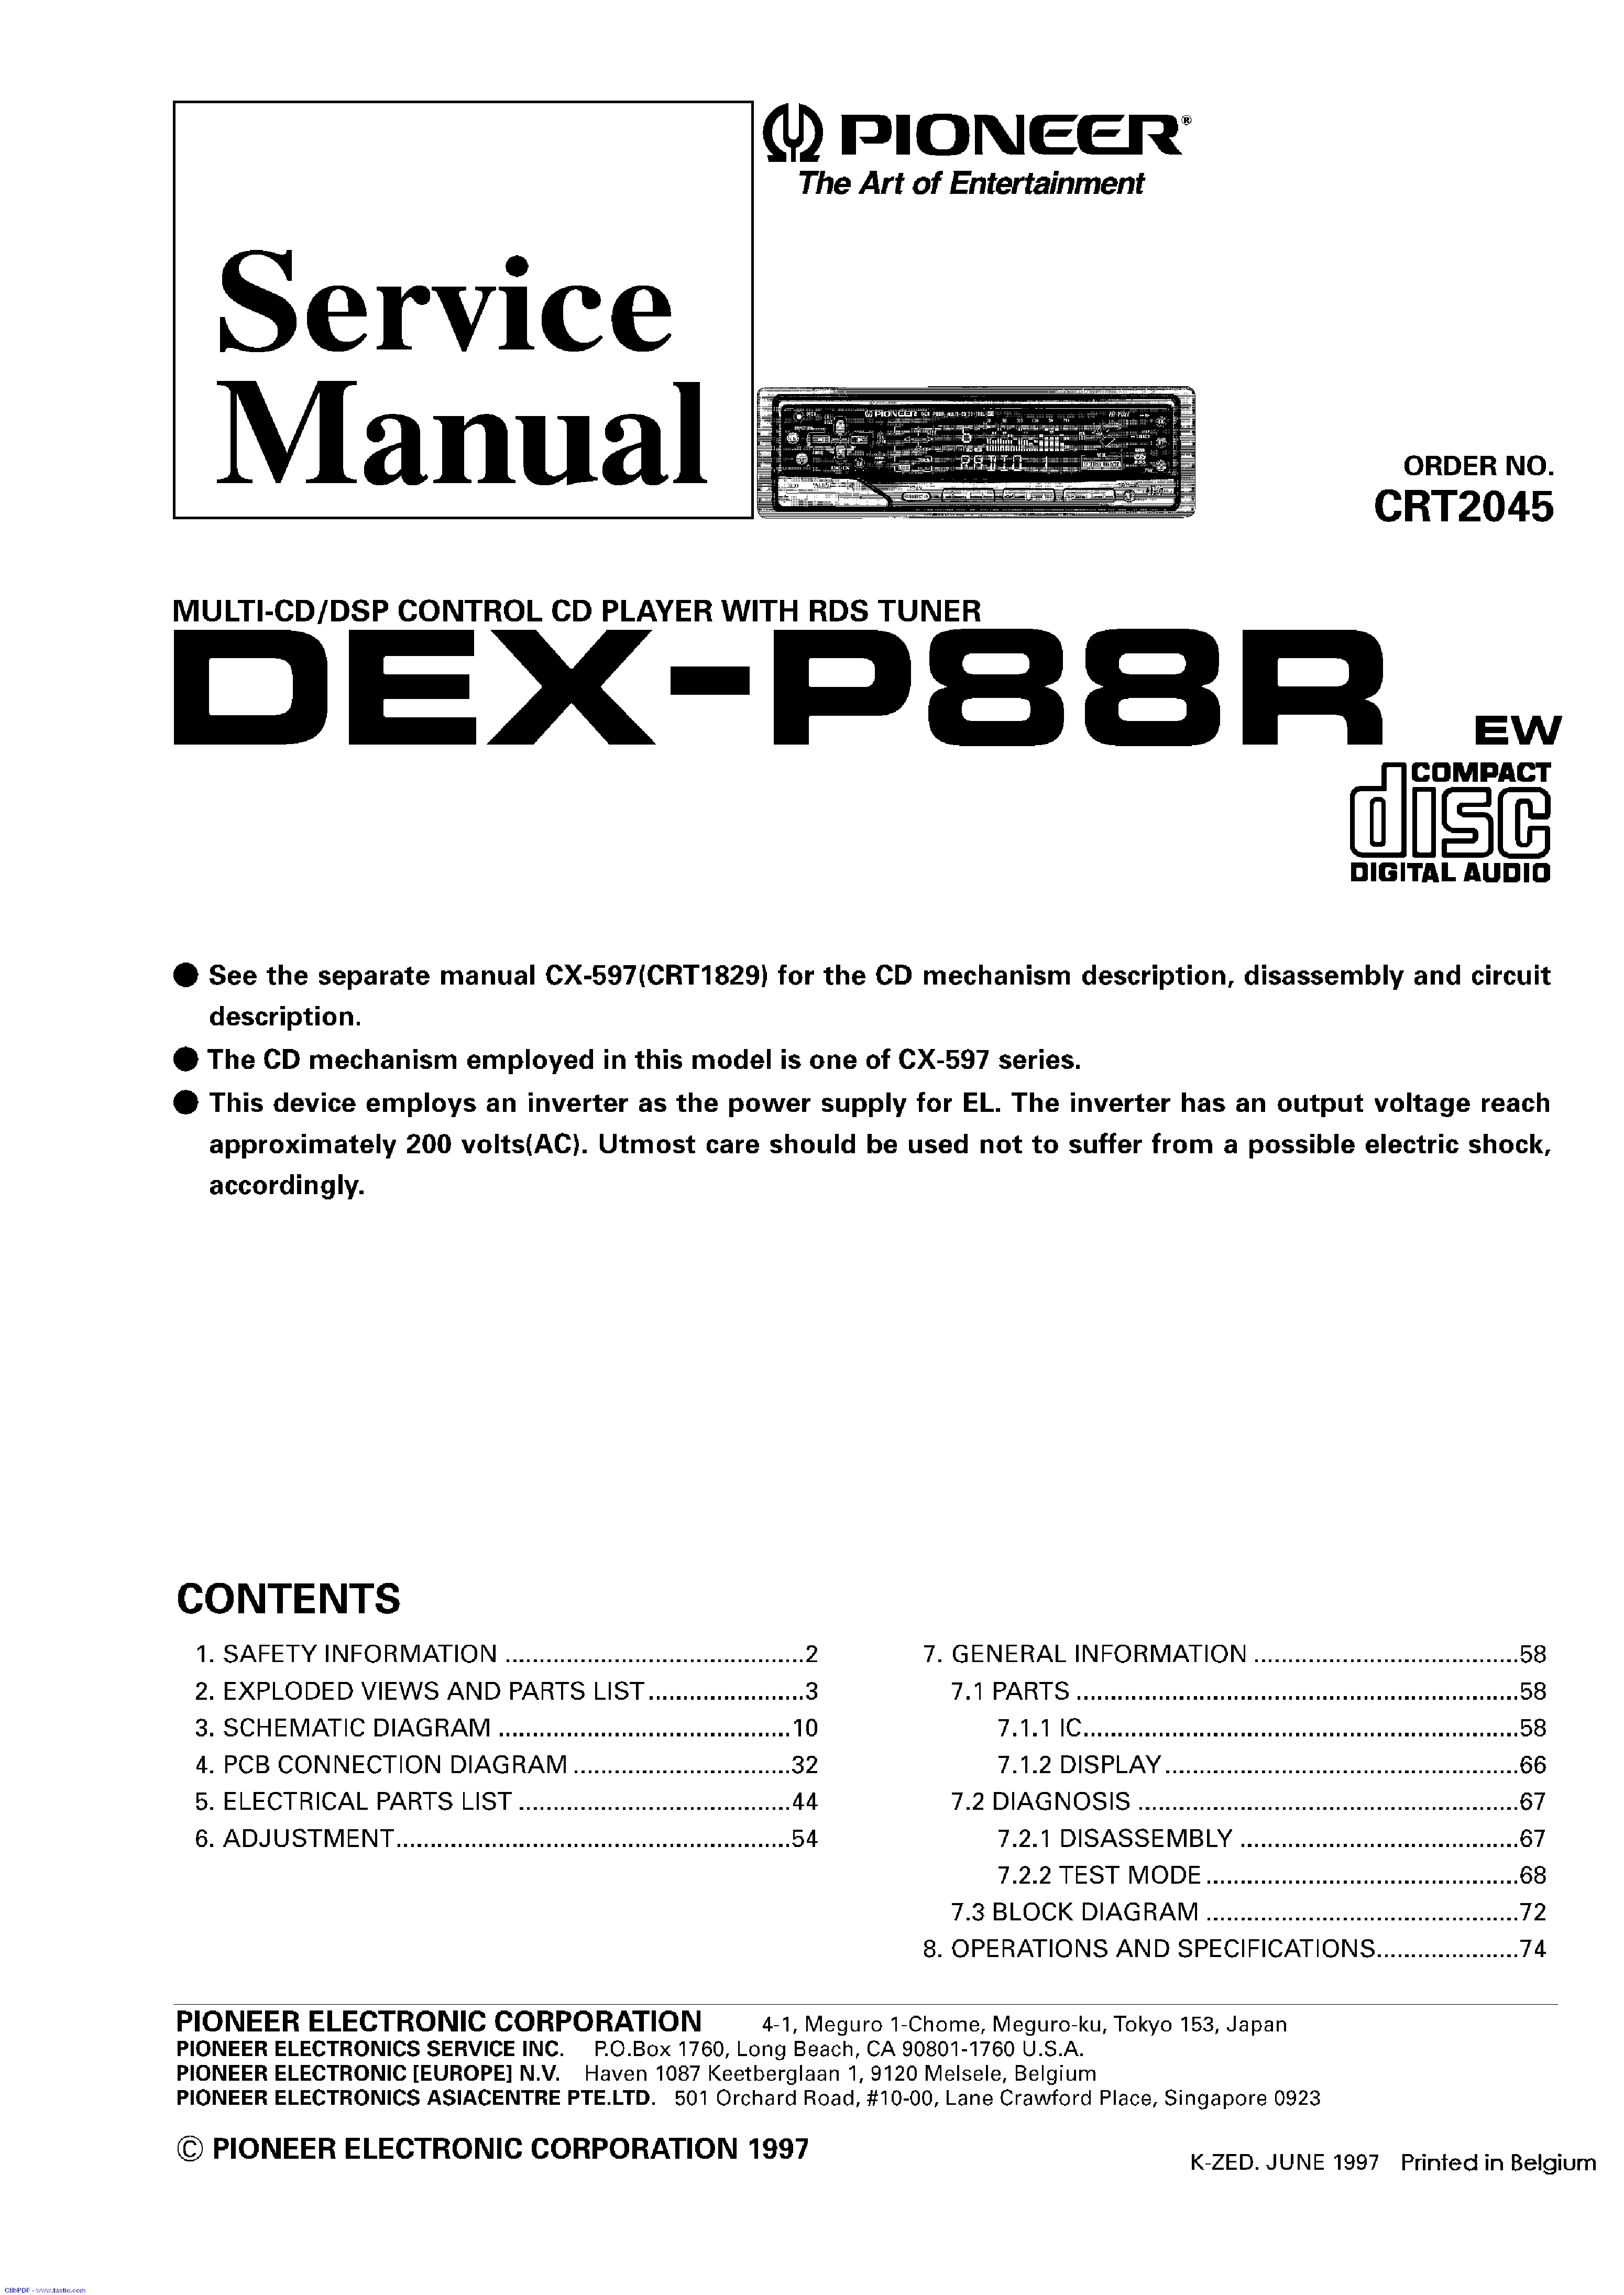 PIONEER DEXP88R service manual (1st page)